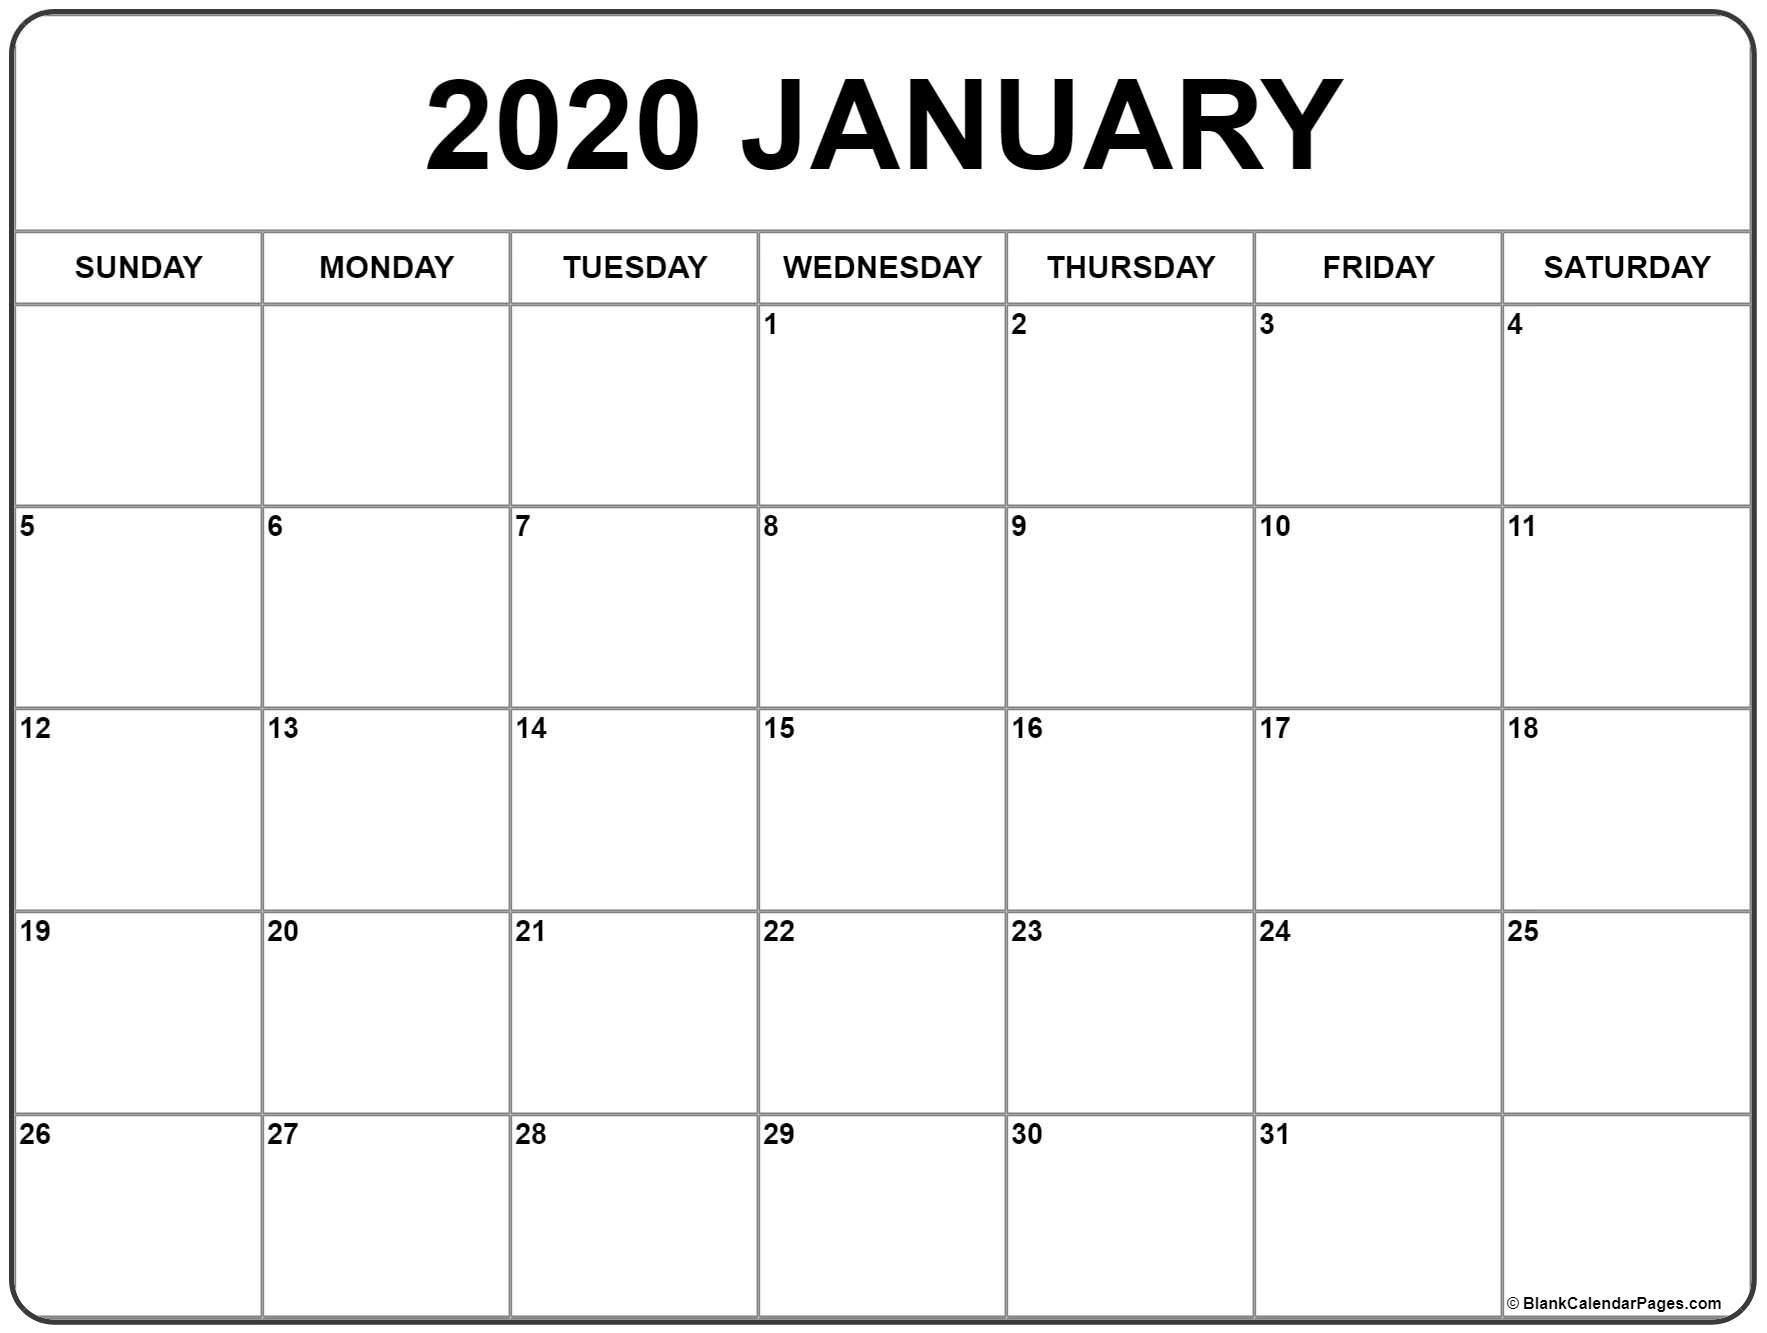 January 2020 Calendar | Free Printable Monthly Calendars-Blank 2020 Calendar Printable 2 Month